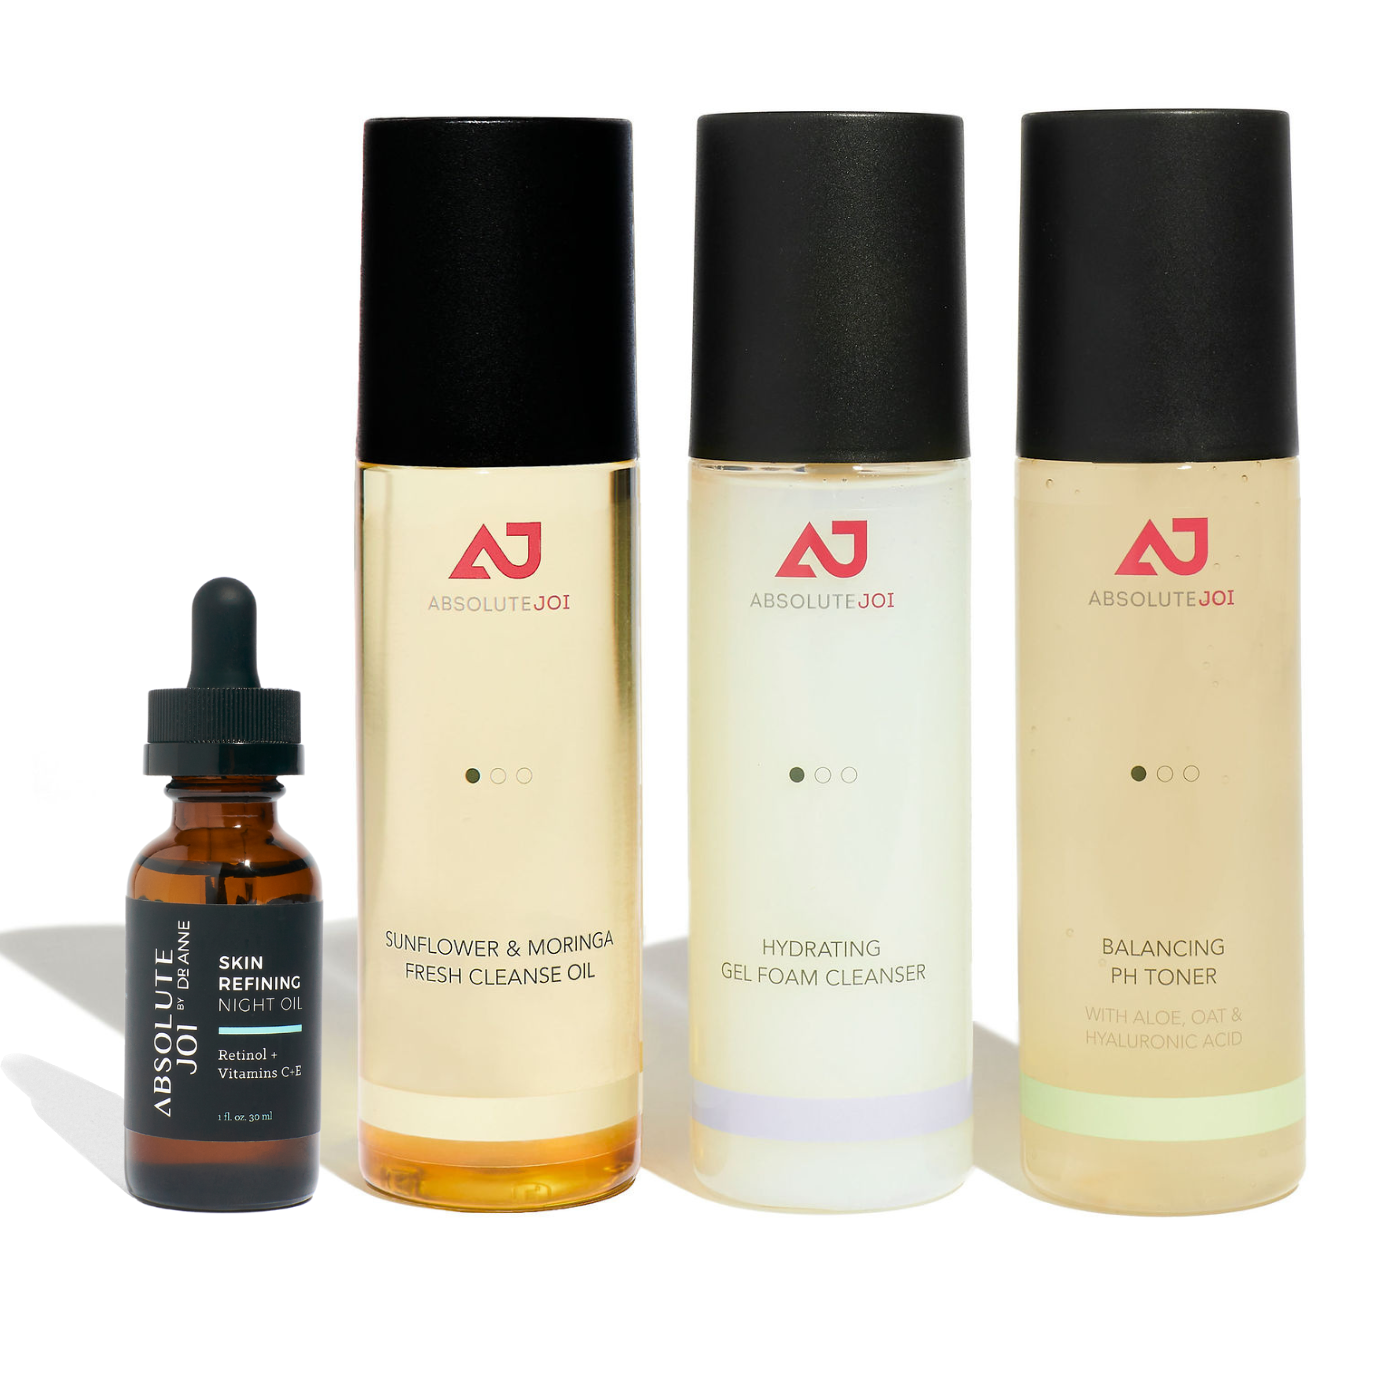 Double Cleansing Oil Kit Plus Retinol Night Oil - AbsoluteJOI SkinCare 